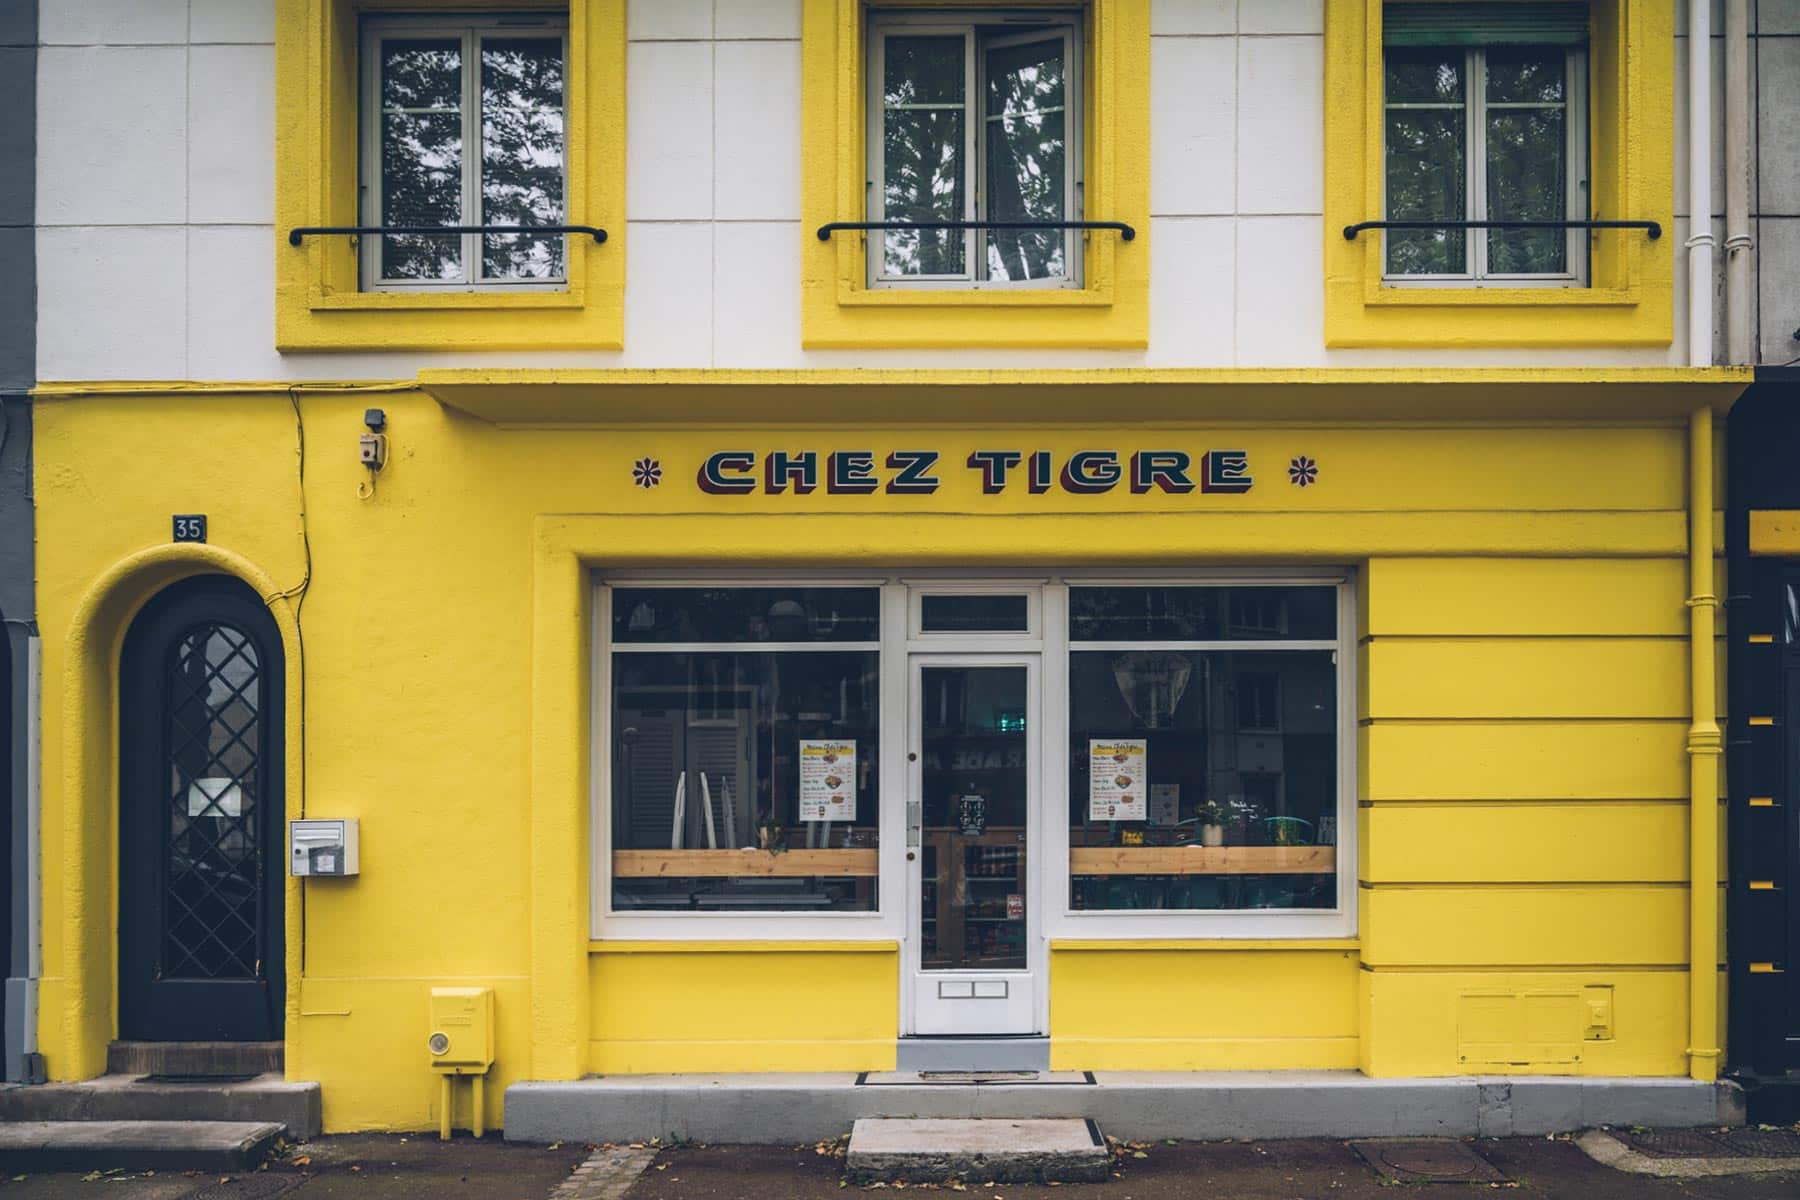 Chez tigre, Lorient